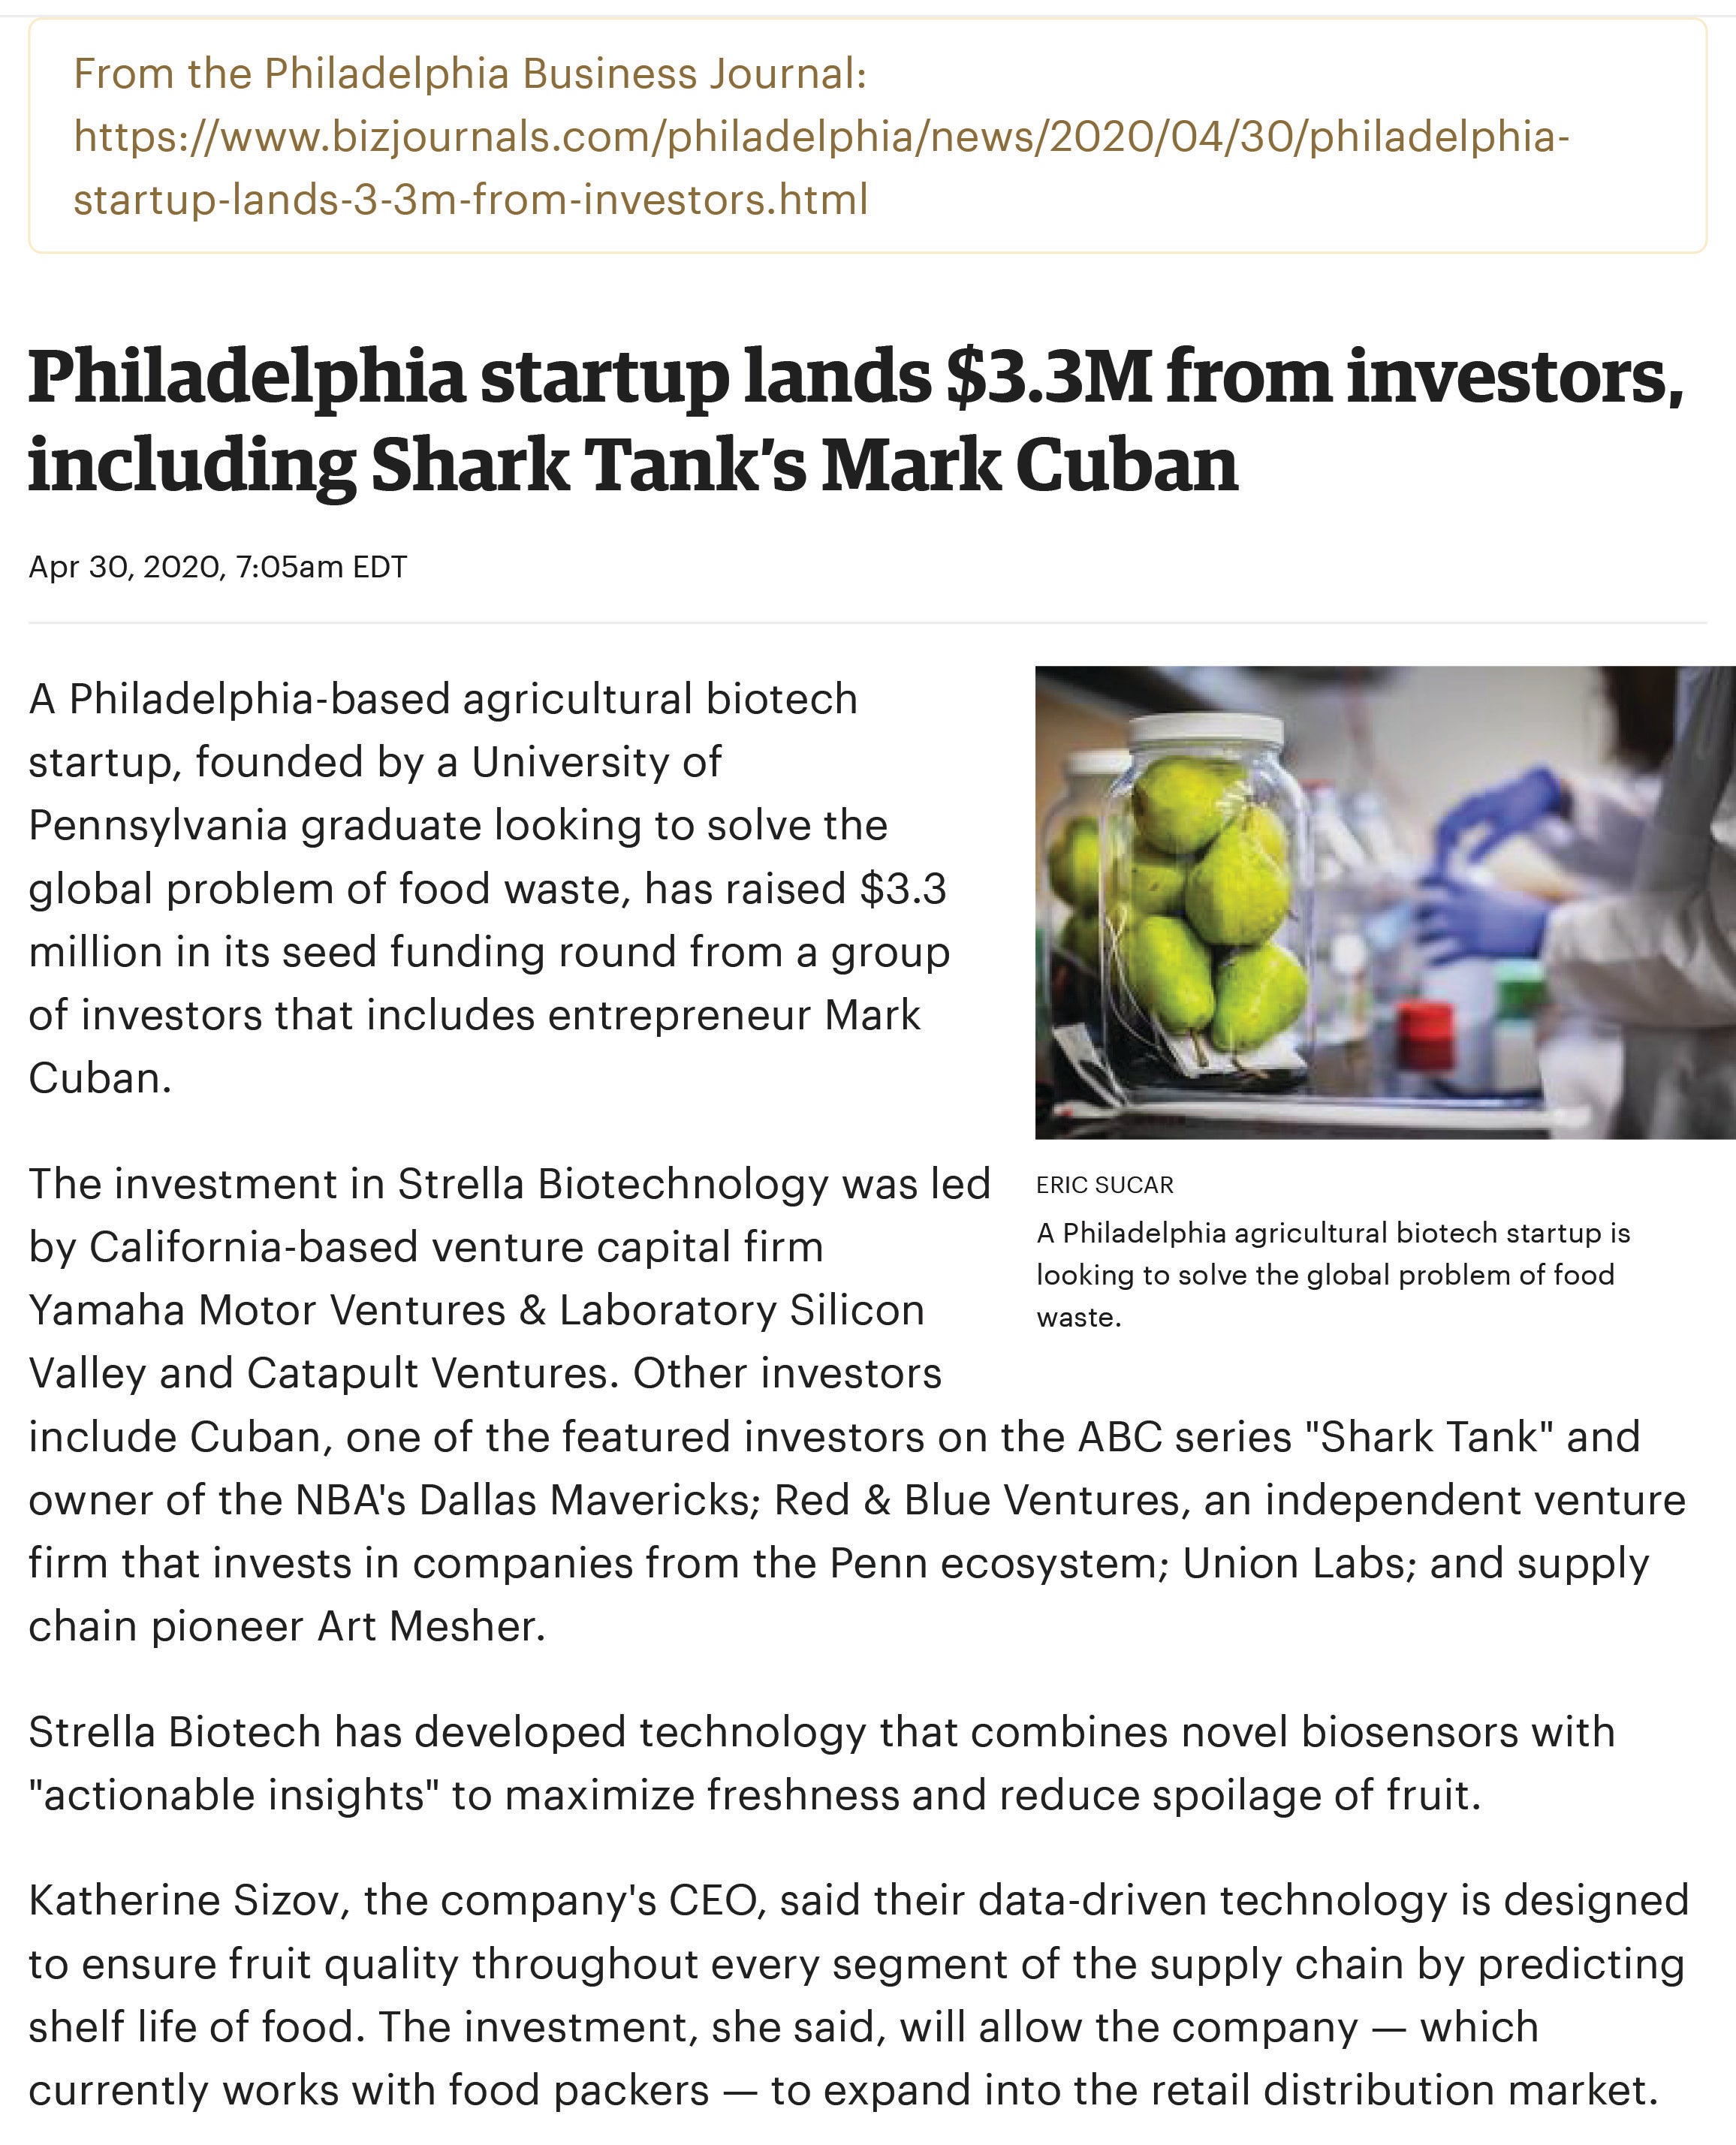 Screenshot from Philadelphia Business Journal